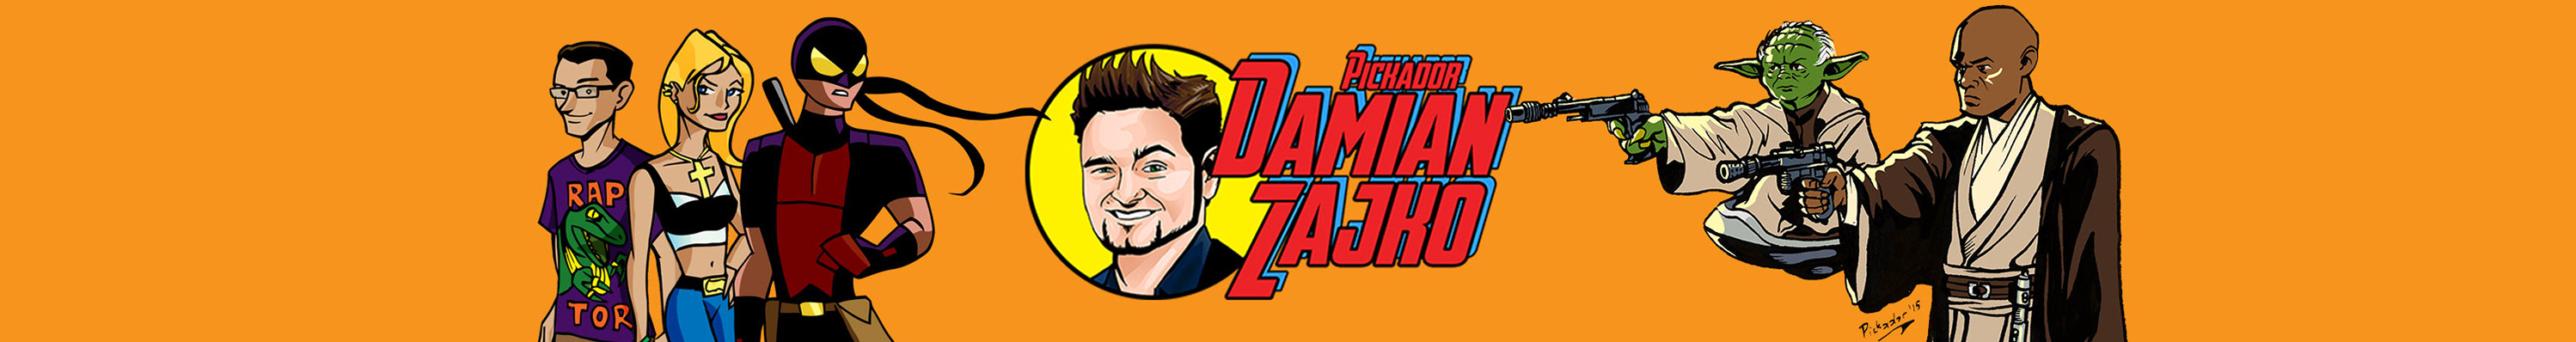 PICKADOR Damian Zajko's profile banner